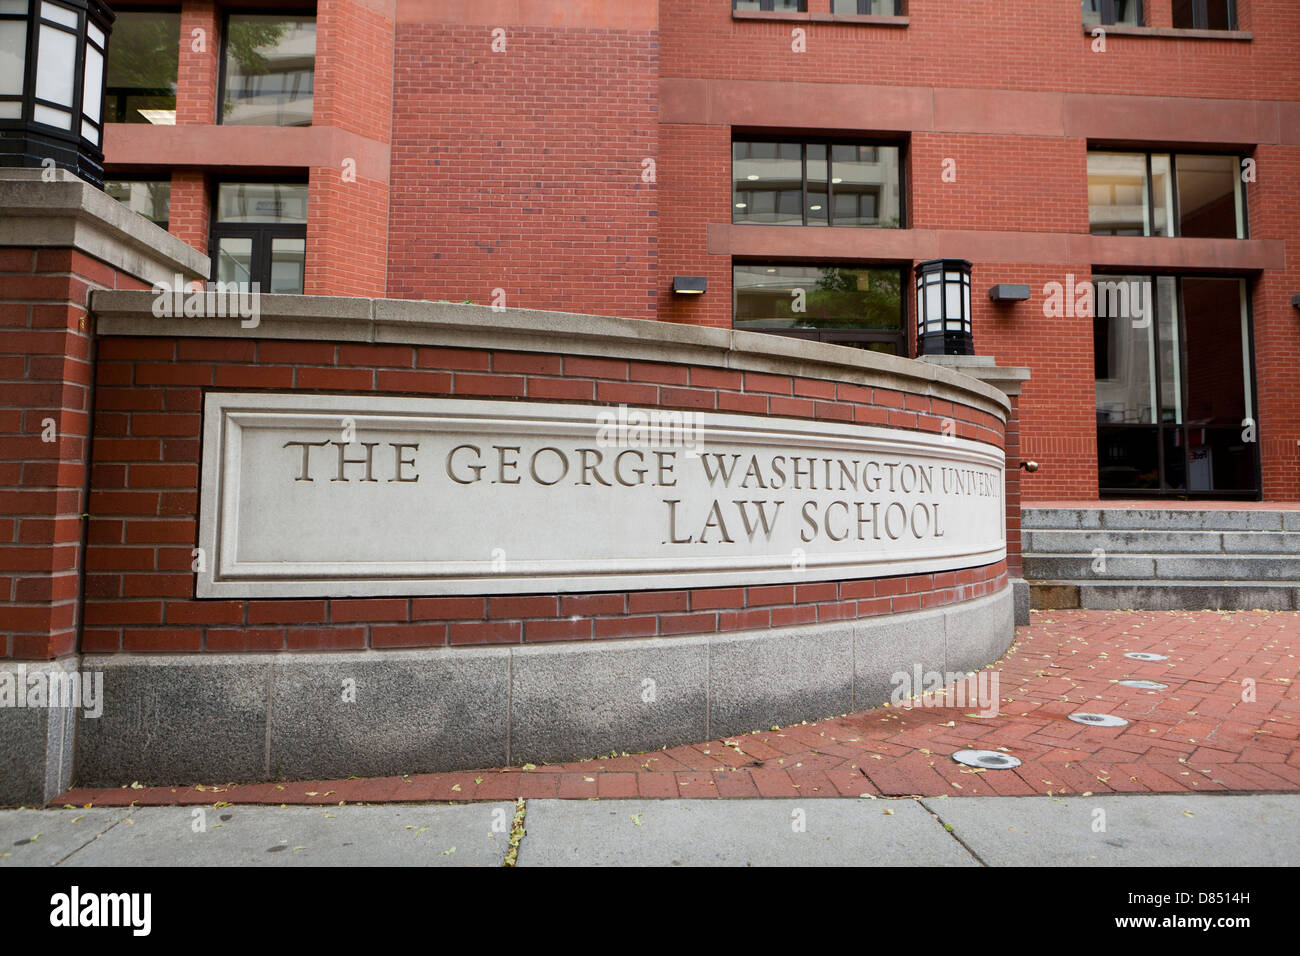 George Washington University Law School Building - Washington, DC USA Banque D'Images